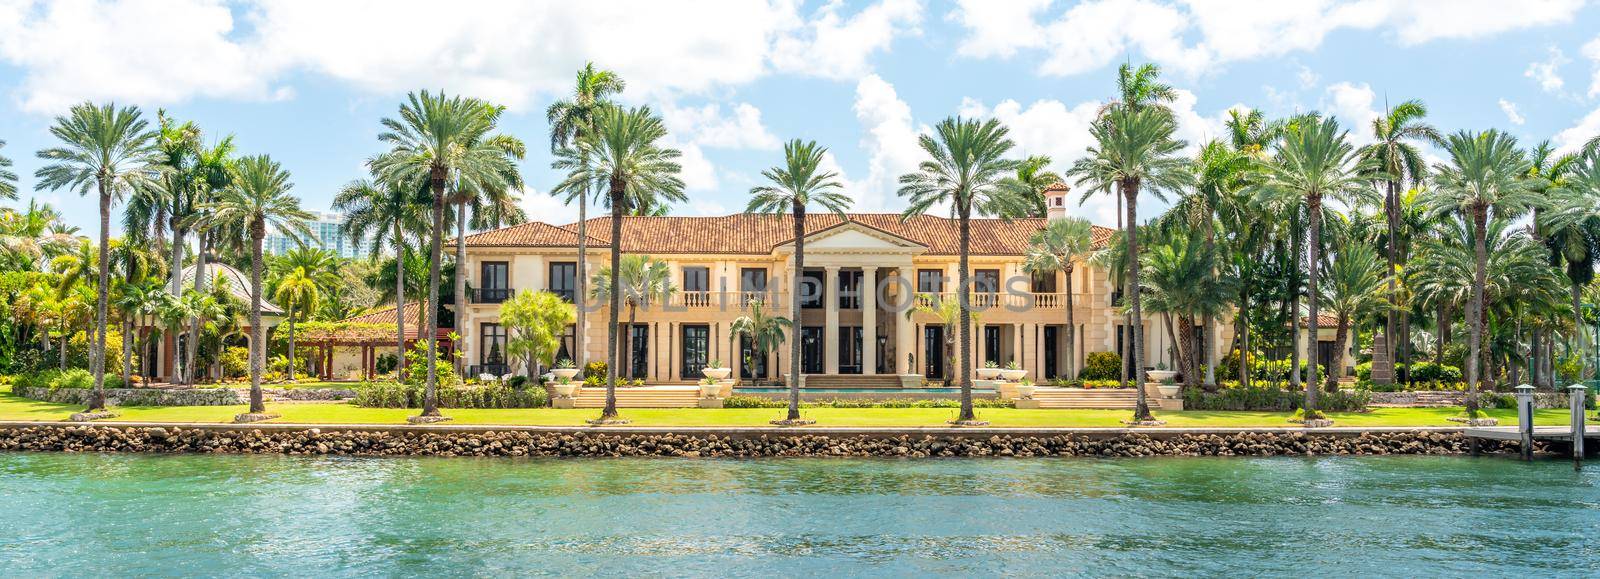 Luxurious mansion in Miami Beach, florida, USA by Mariakray